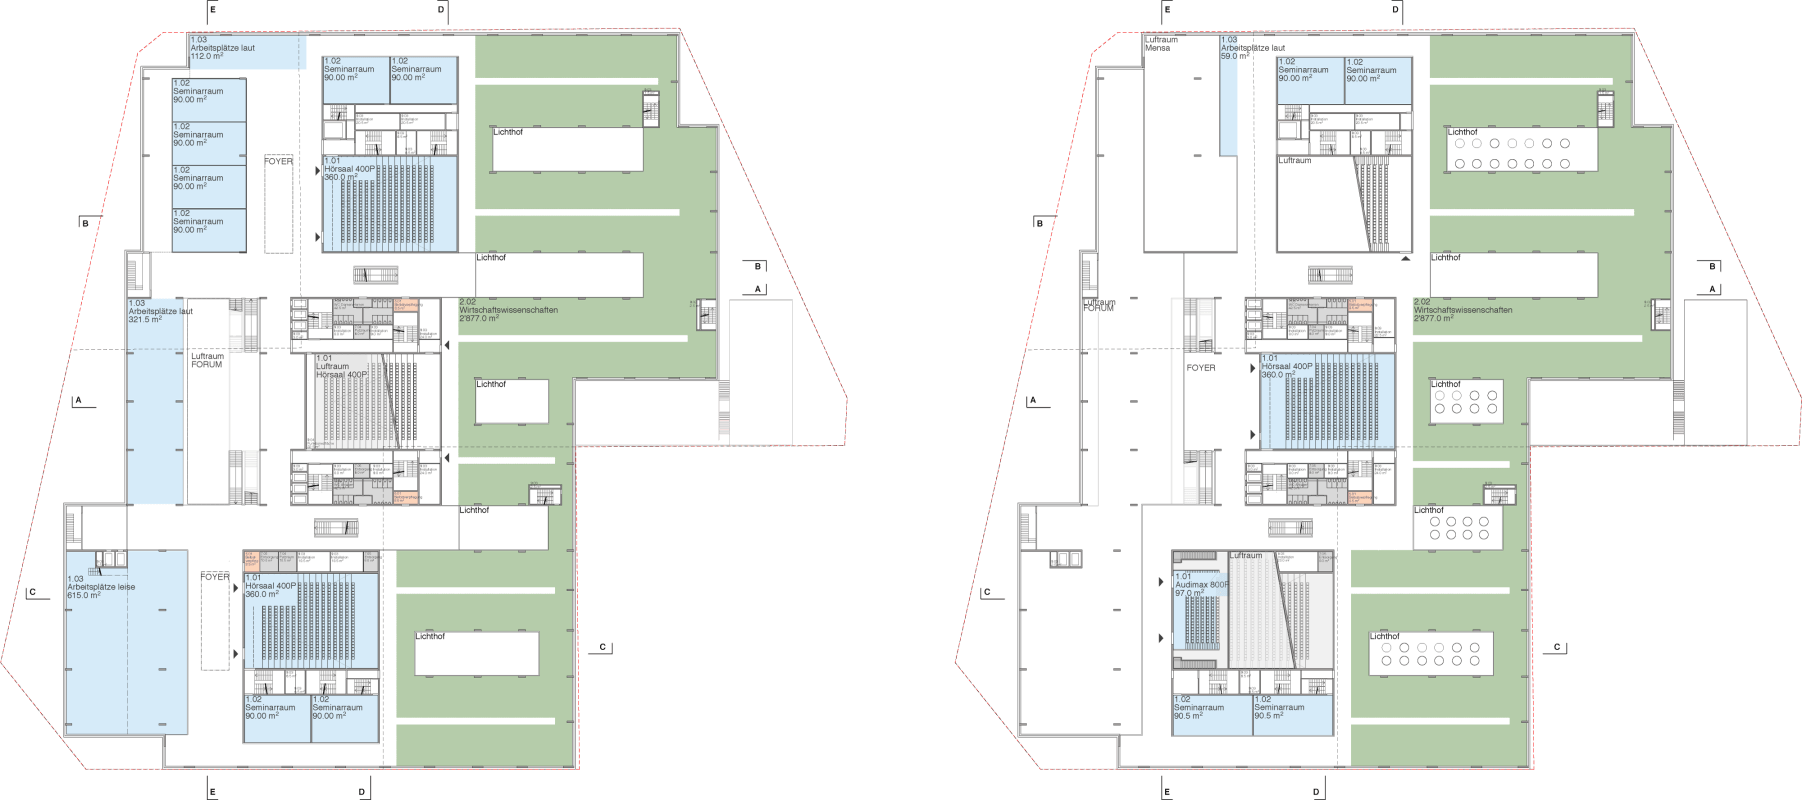 Forum Uni ZH. Upper floor plans, 1st and 2nd floor, scale 1:500. (2-1OG)